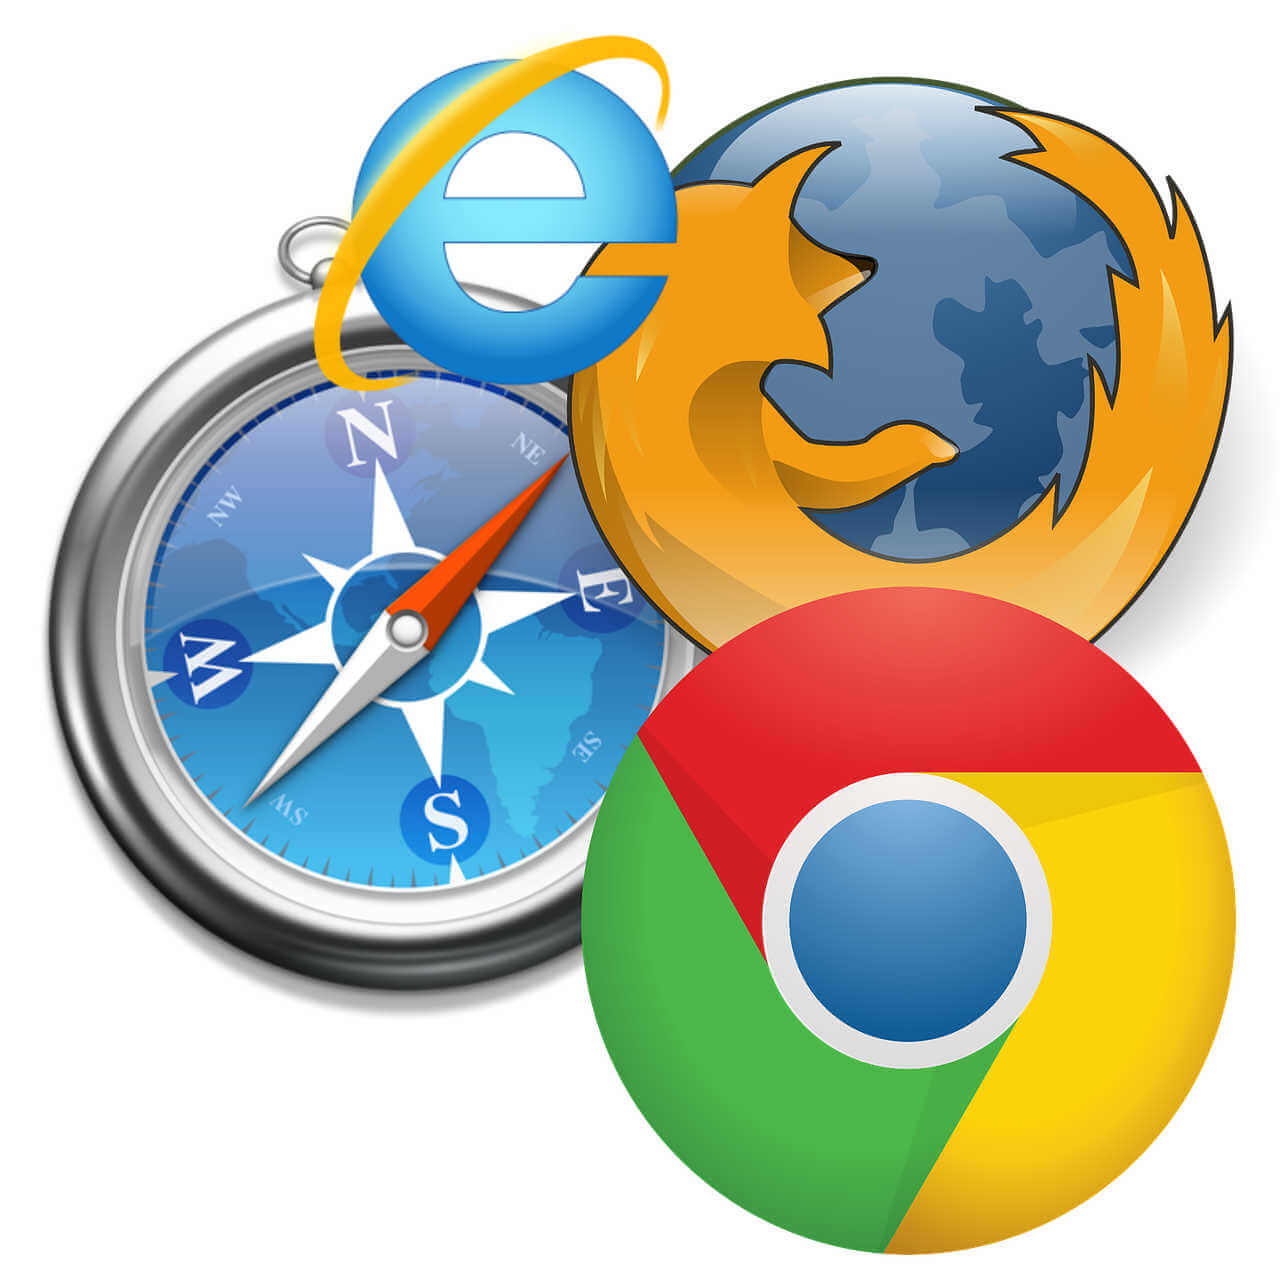 edge browser market share statistics